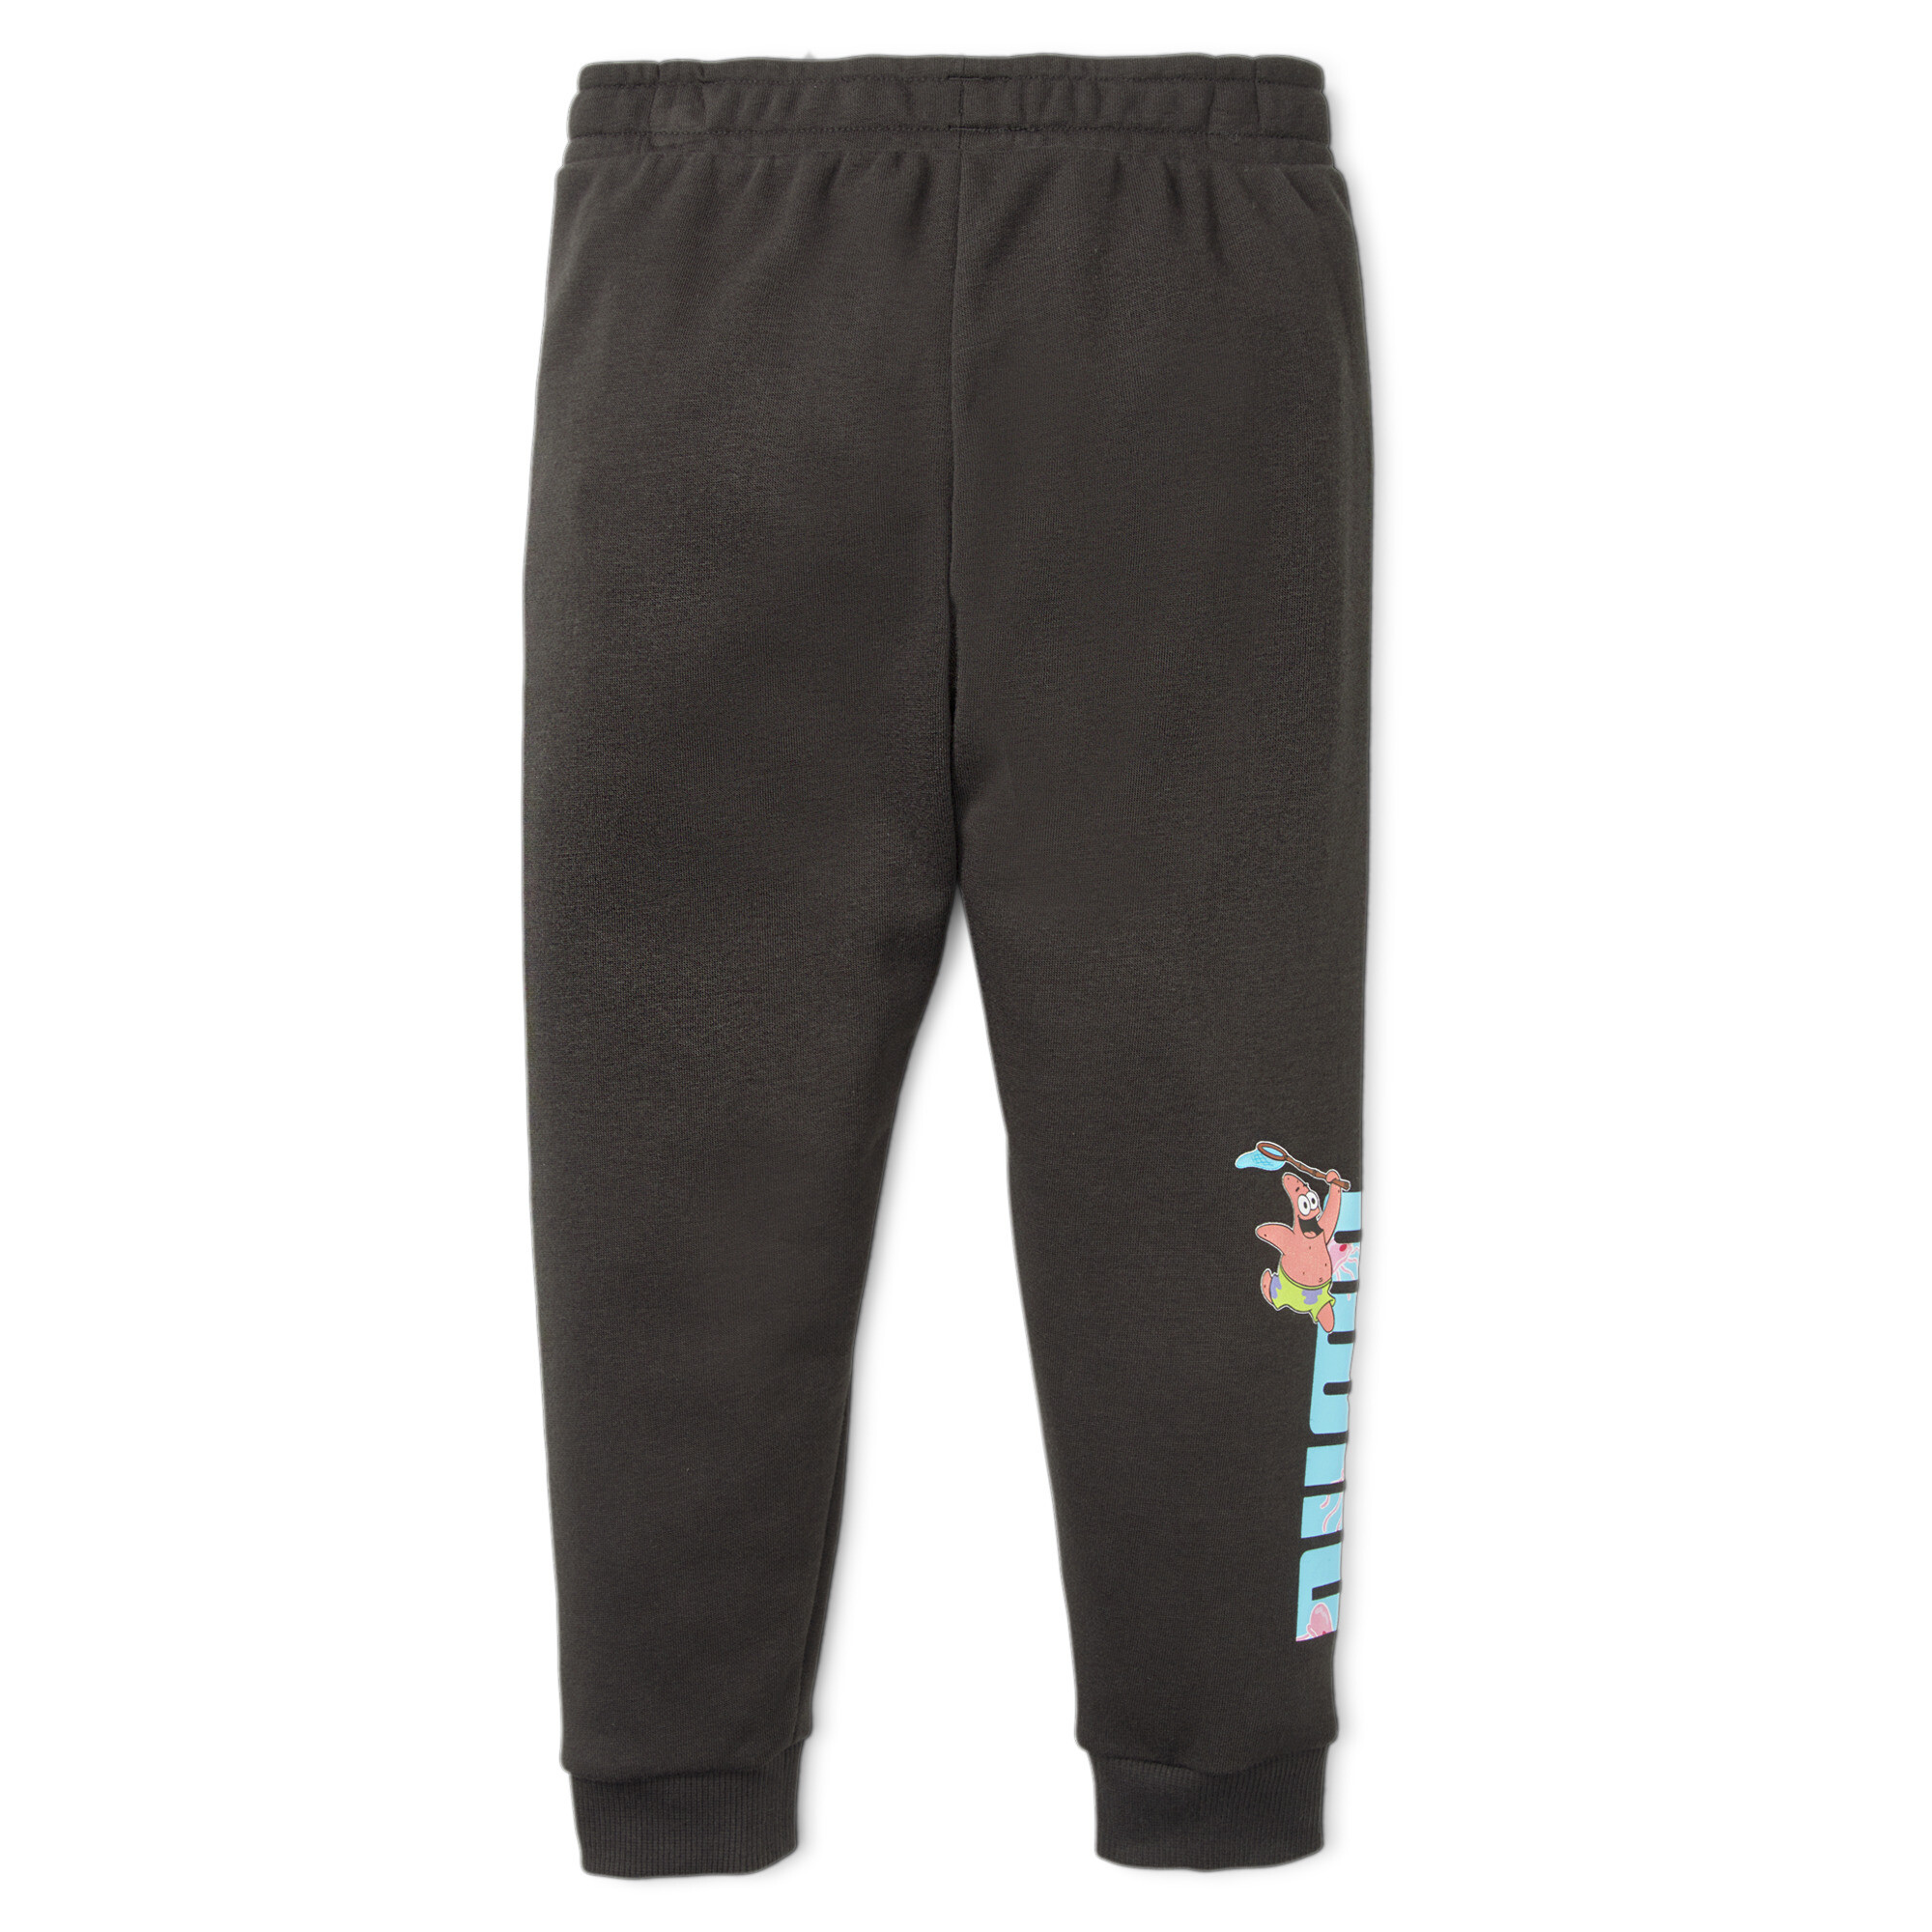 Puma X SPONGEBOB Sweatpants Kids, Black, Size 15-16Y, Clothing